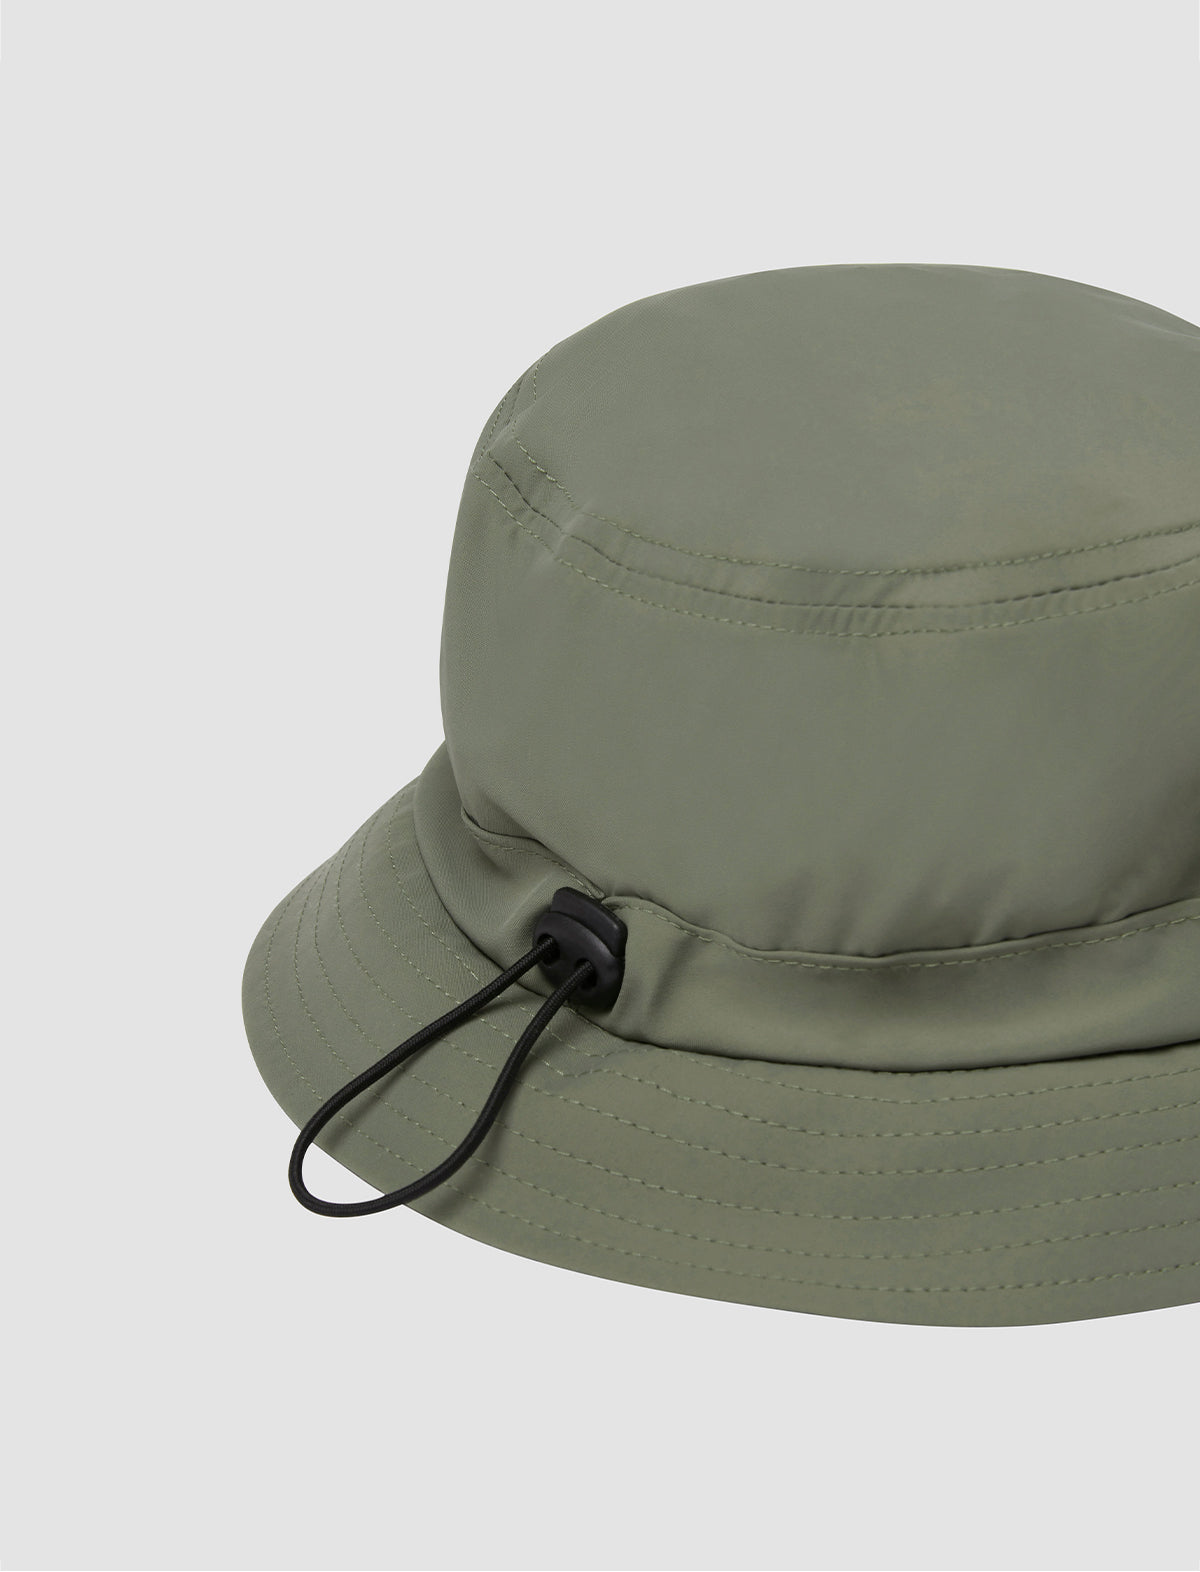 MANORS GOLF Ranger Bucket Hat In Green